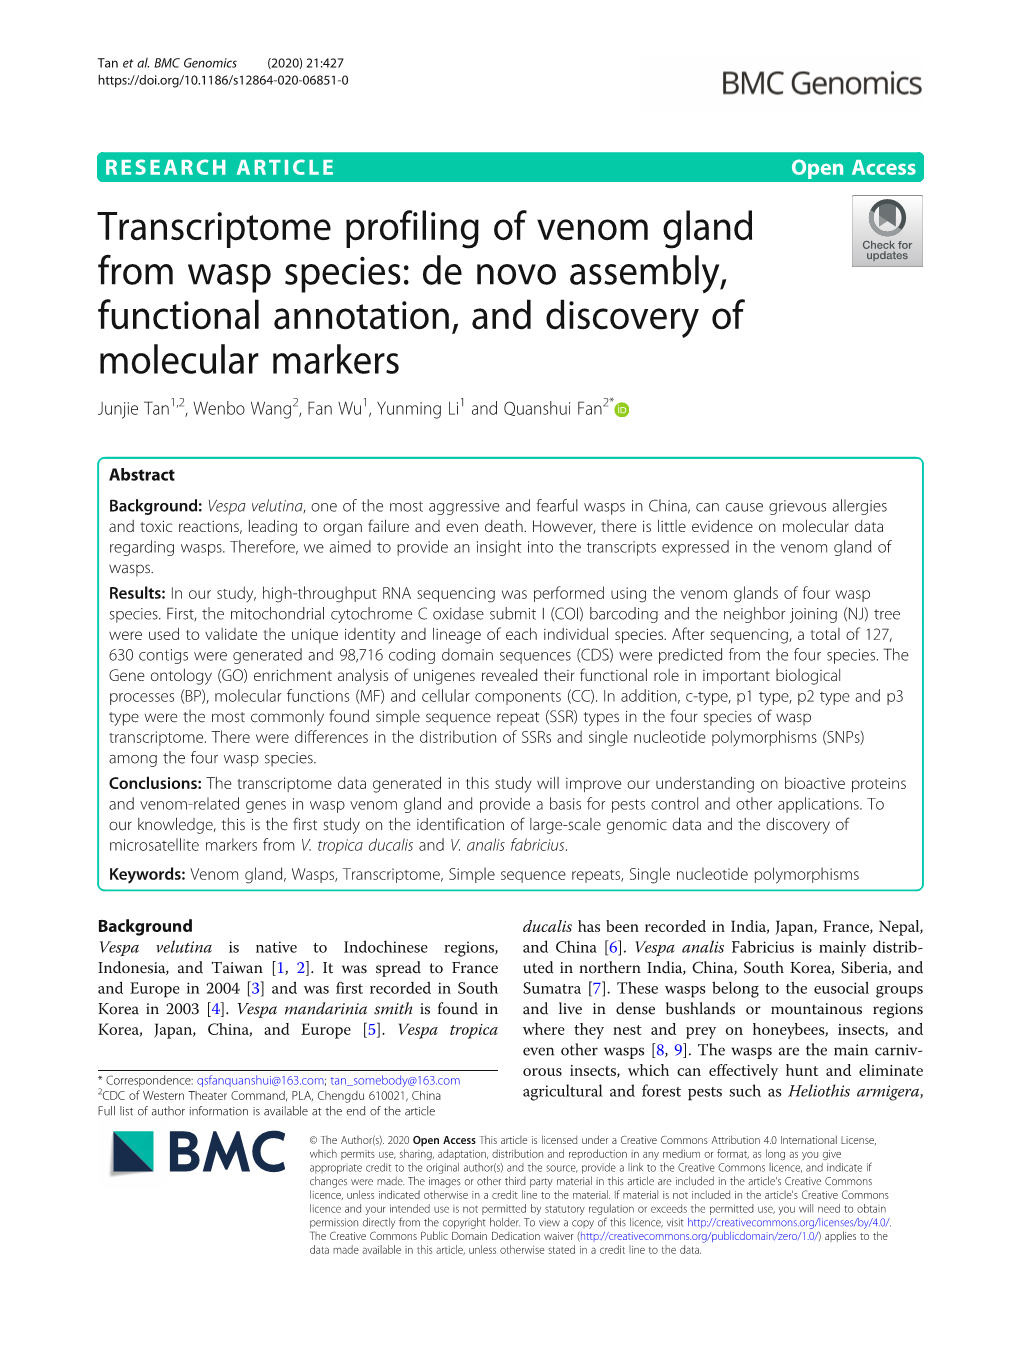 Transcriptome Profiling of Venom Gland from Wasp Species